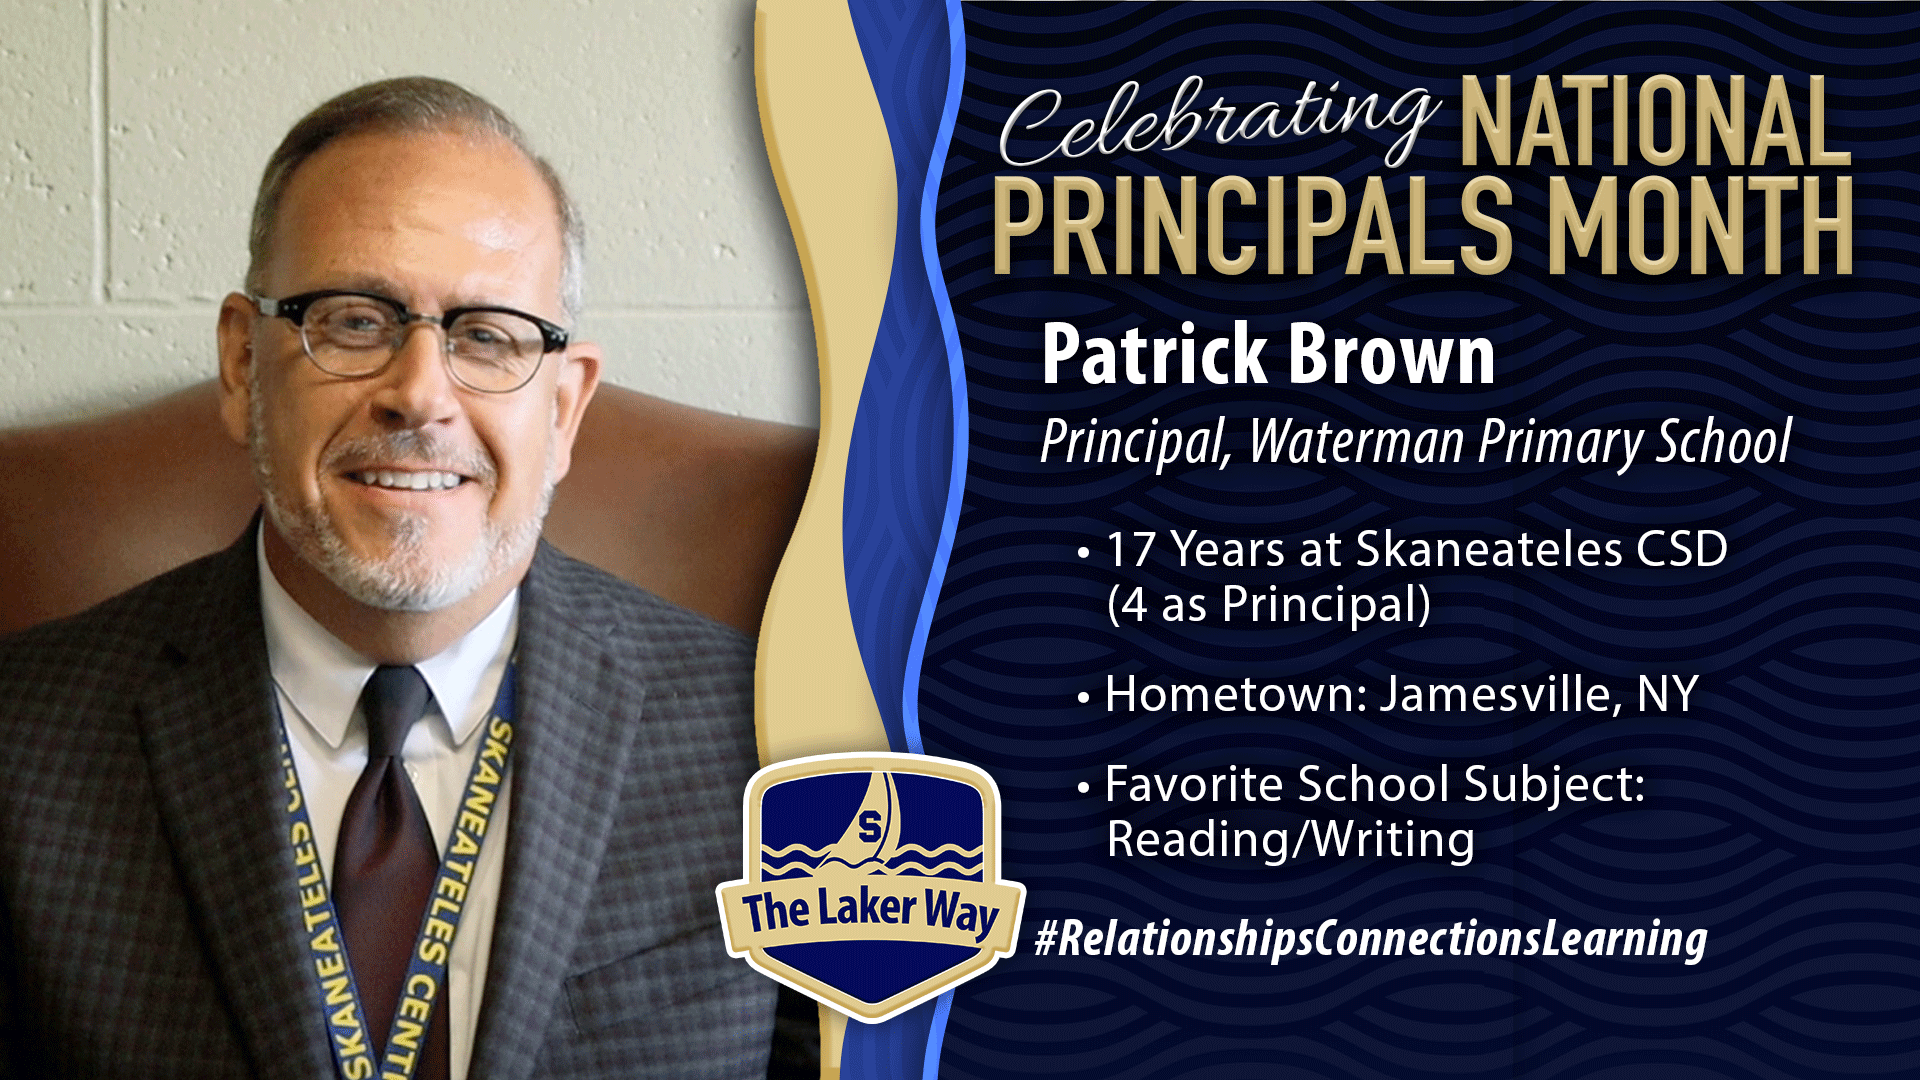 Patrick Brown, Principal, Waterman Primary School